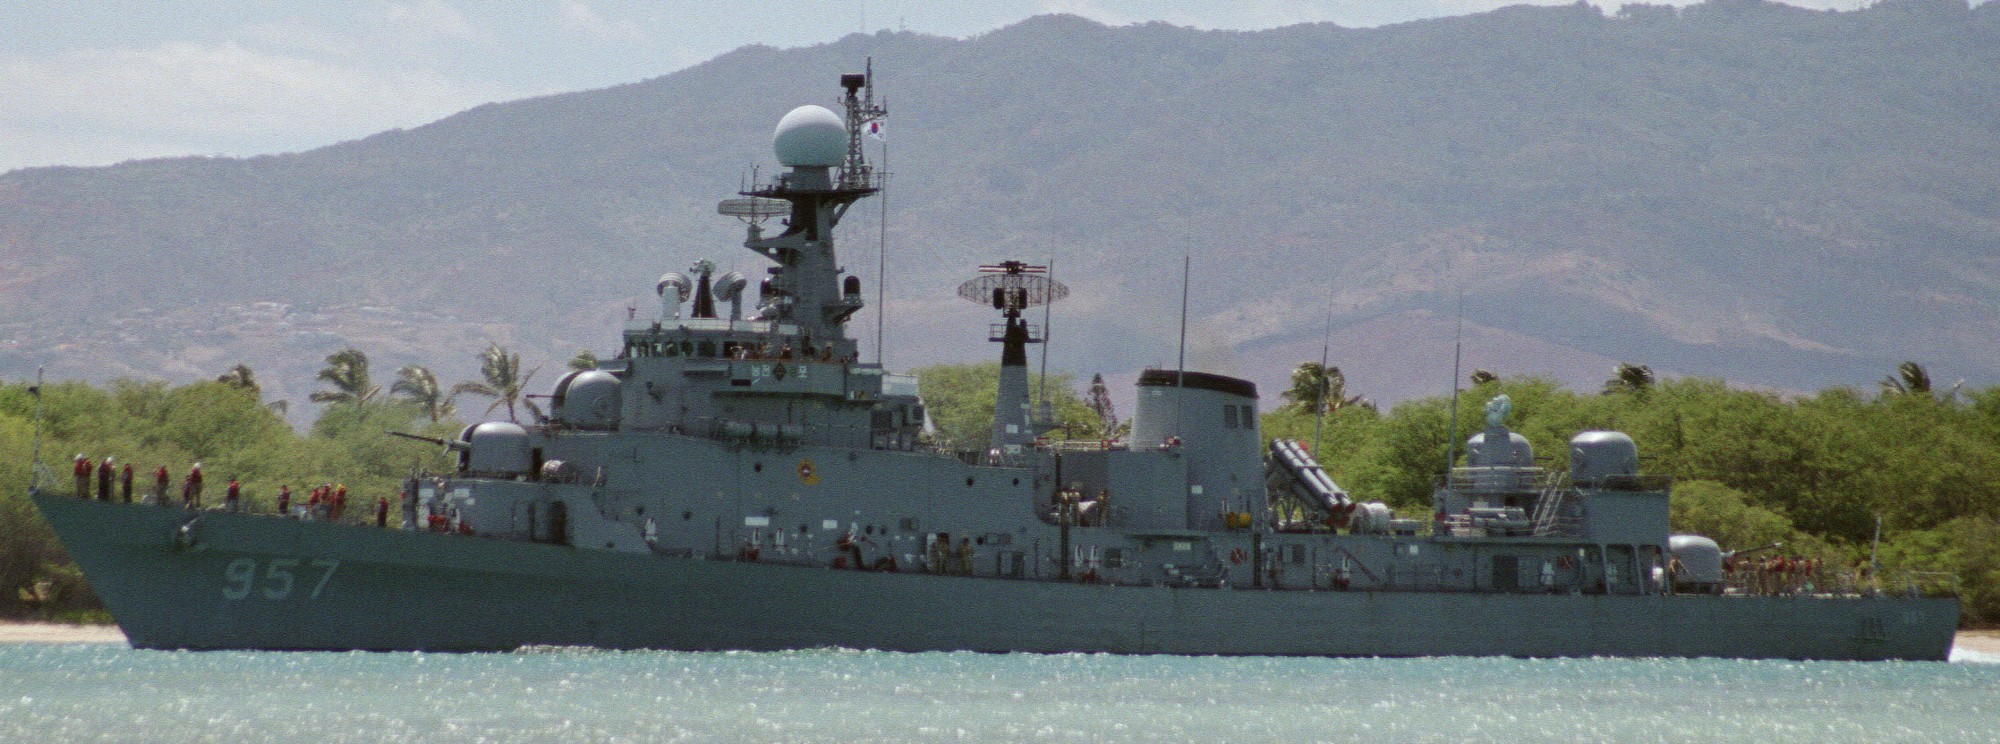 ff-957 roks jeonnam ulsan class frigate republic of korea navy rokn 03